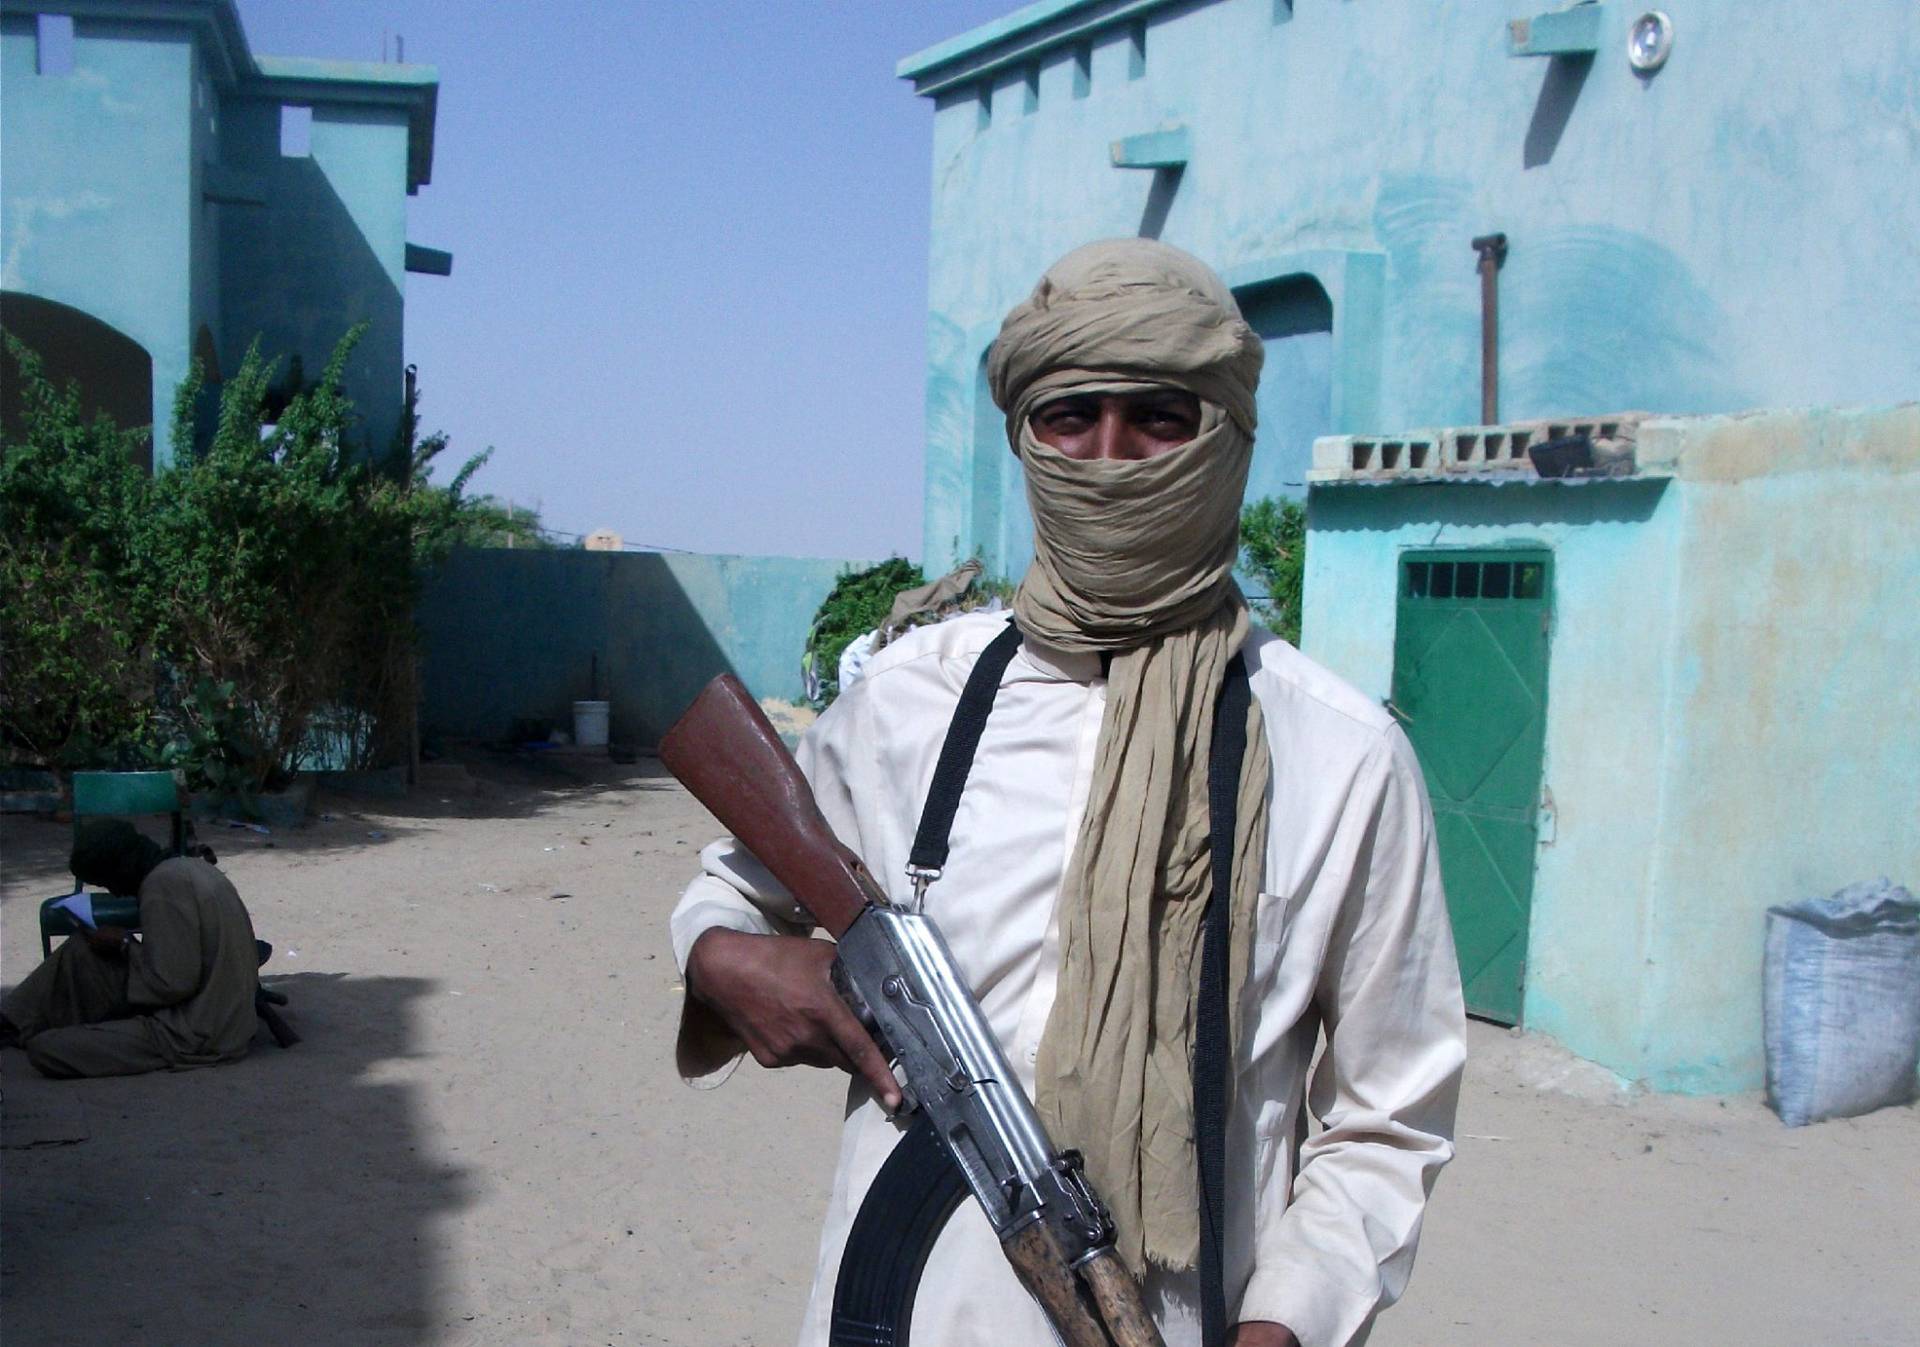 An Islamic militant in Africa's Sahel region. (Credit: Associated Press photo.)